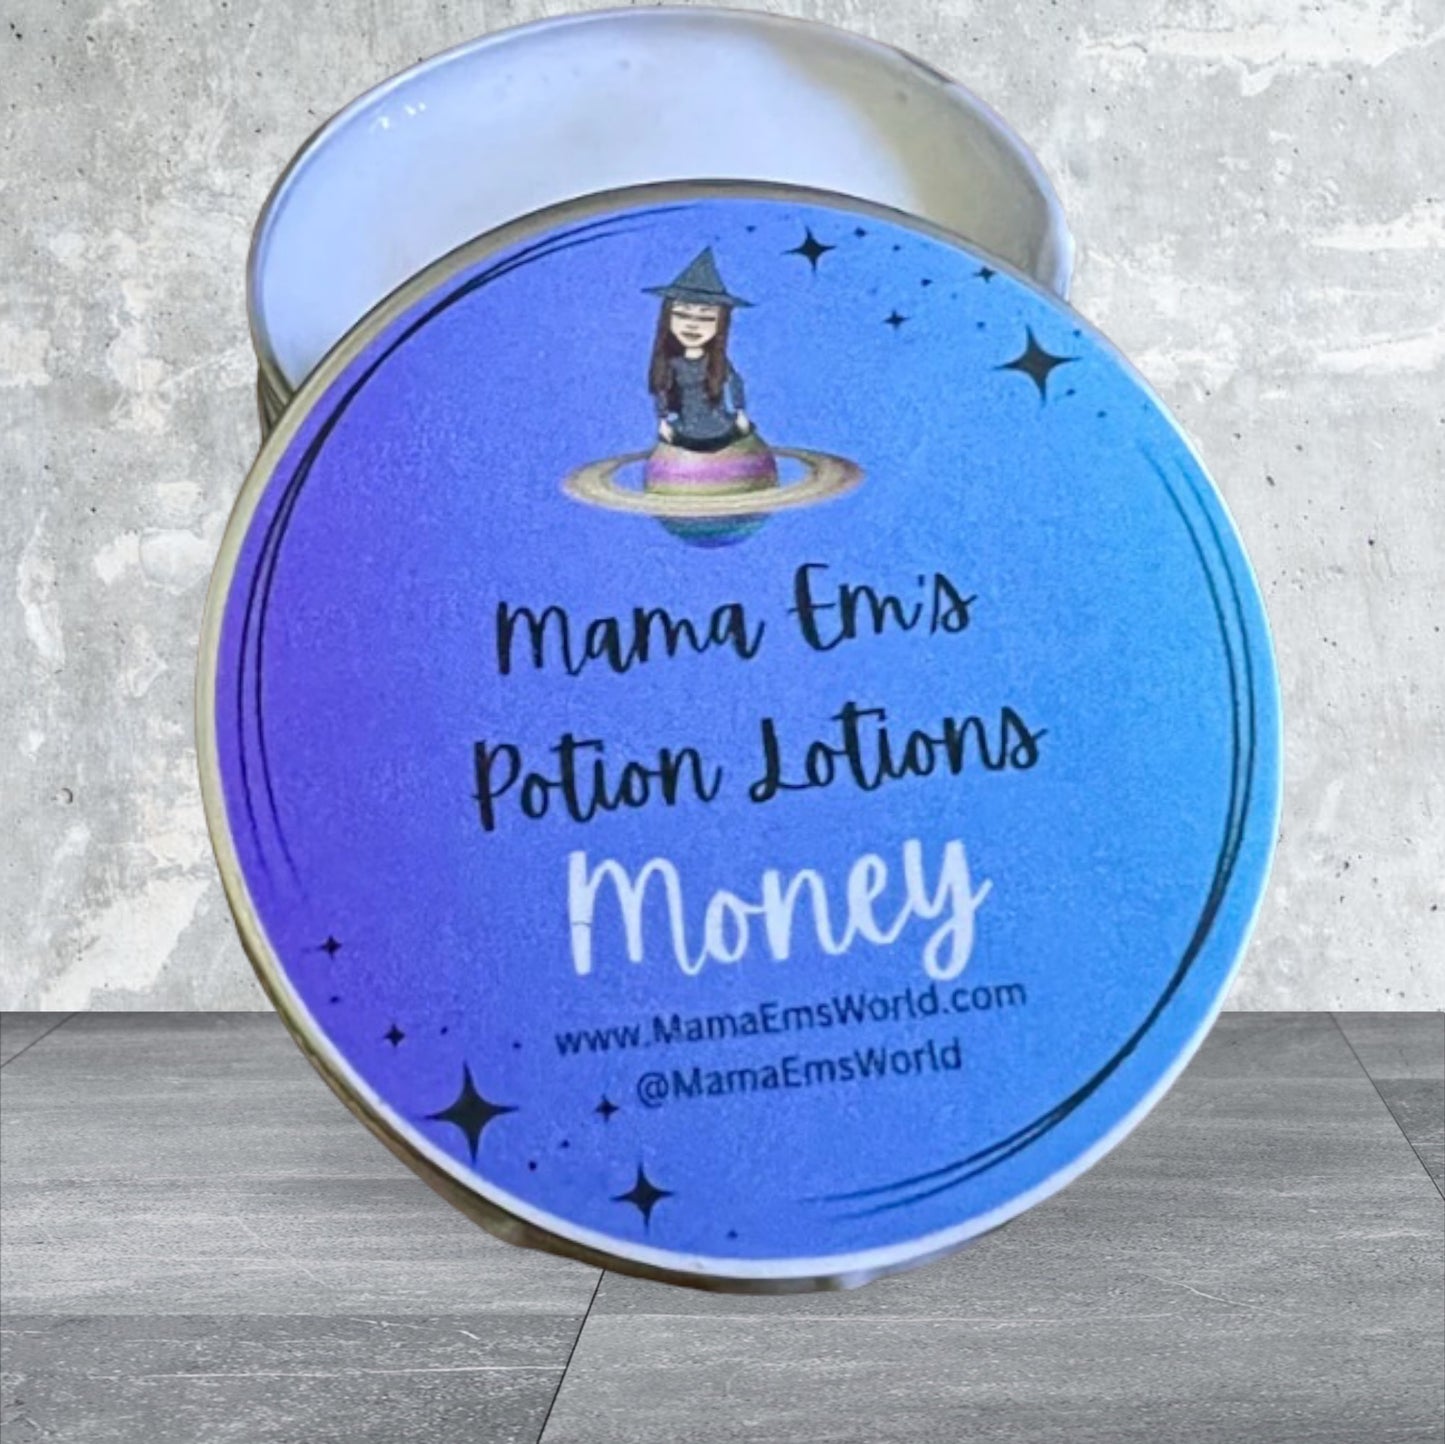 Mama Em’s Organic Potion Lotions
Money